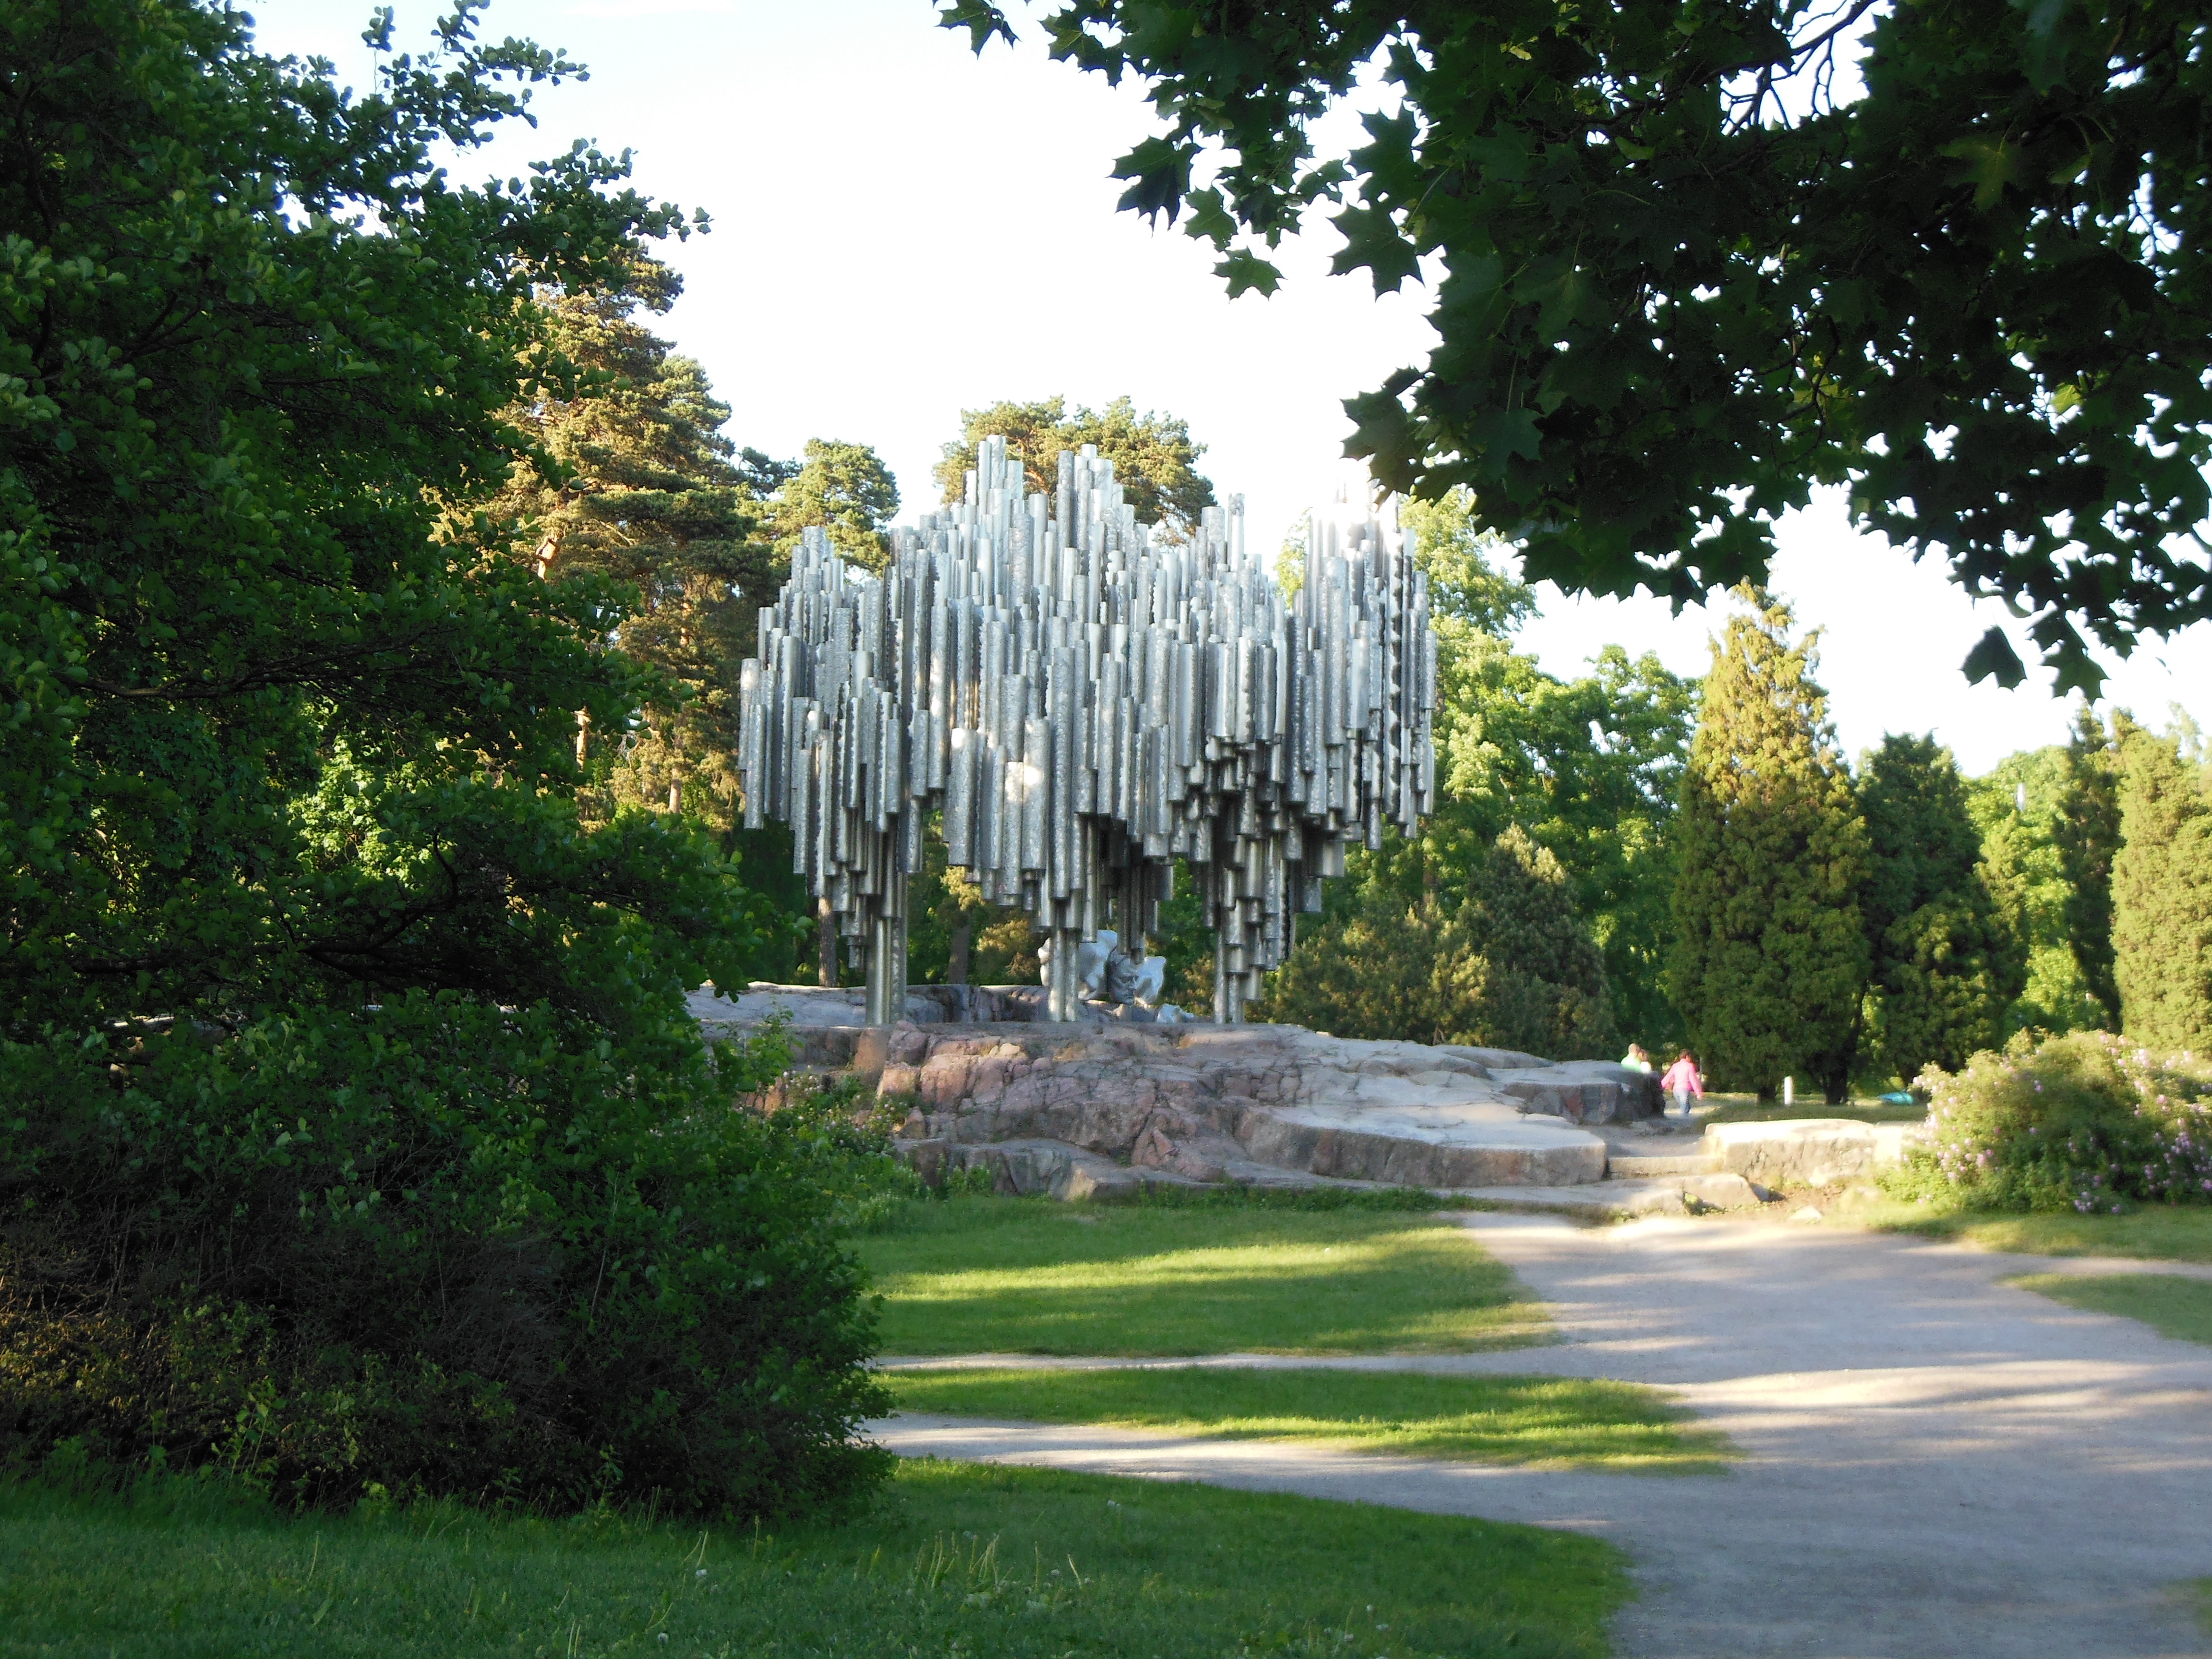 The Sibelius Monument in Helsinki